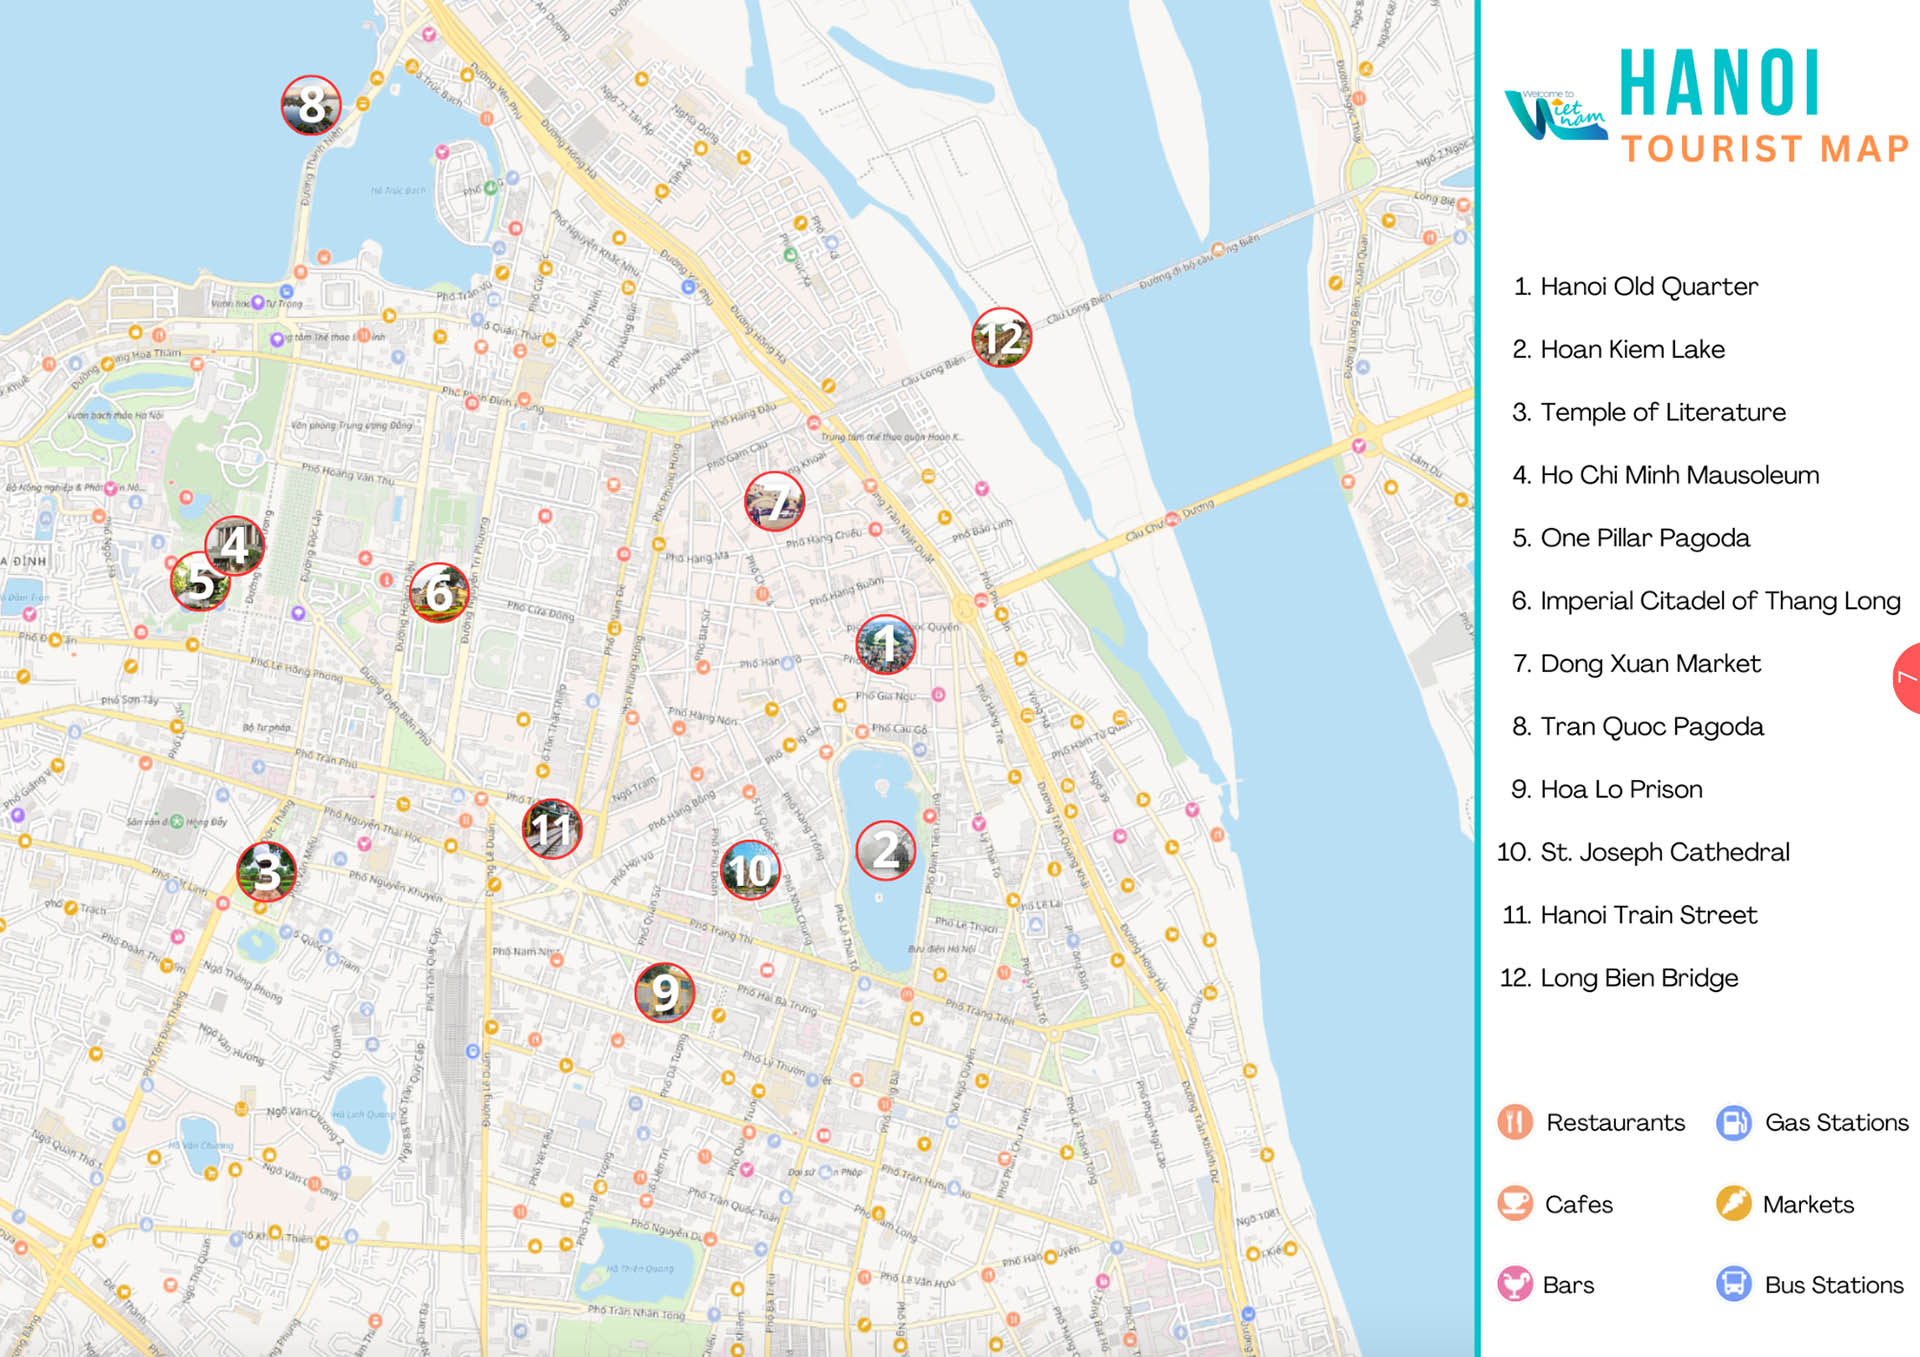 Hanoi Tourist Map